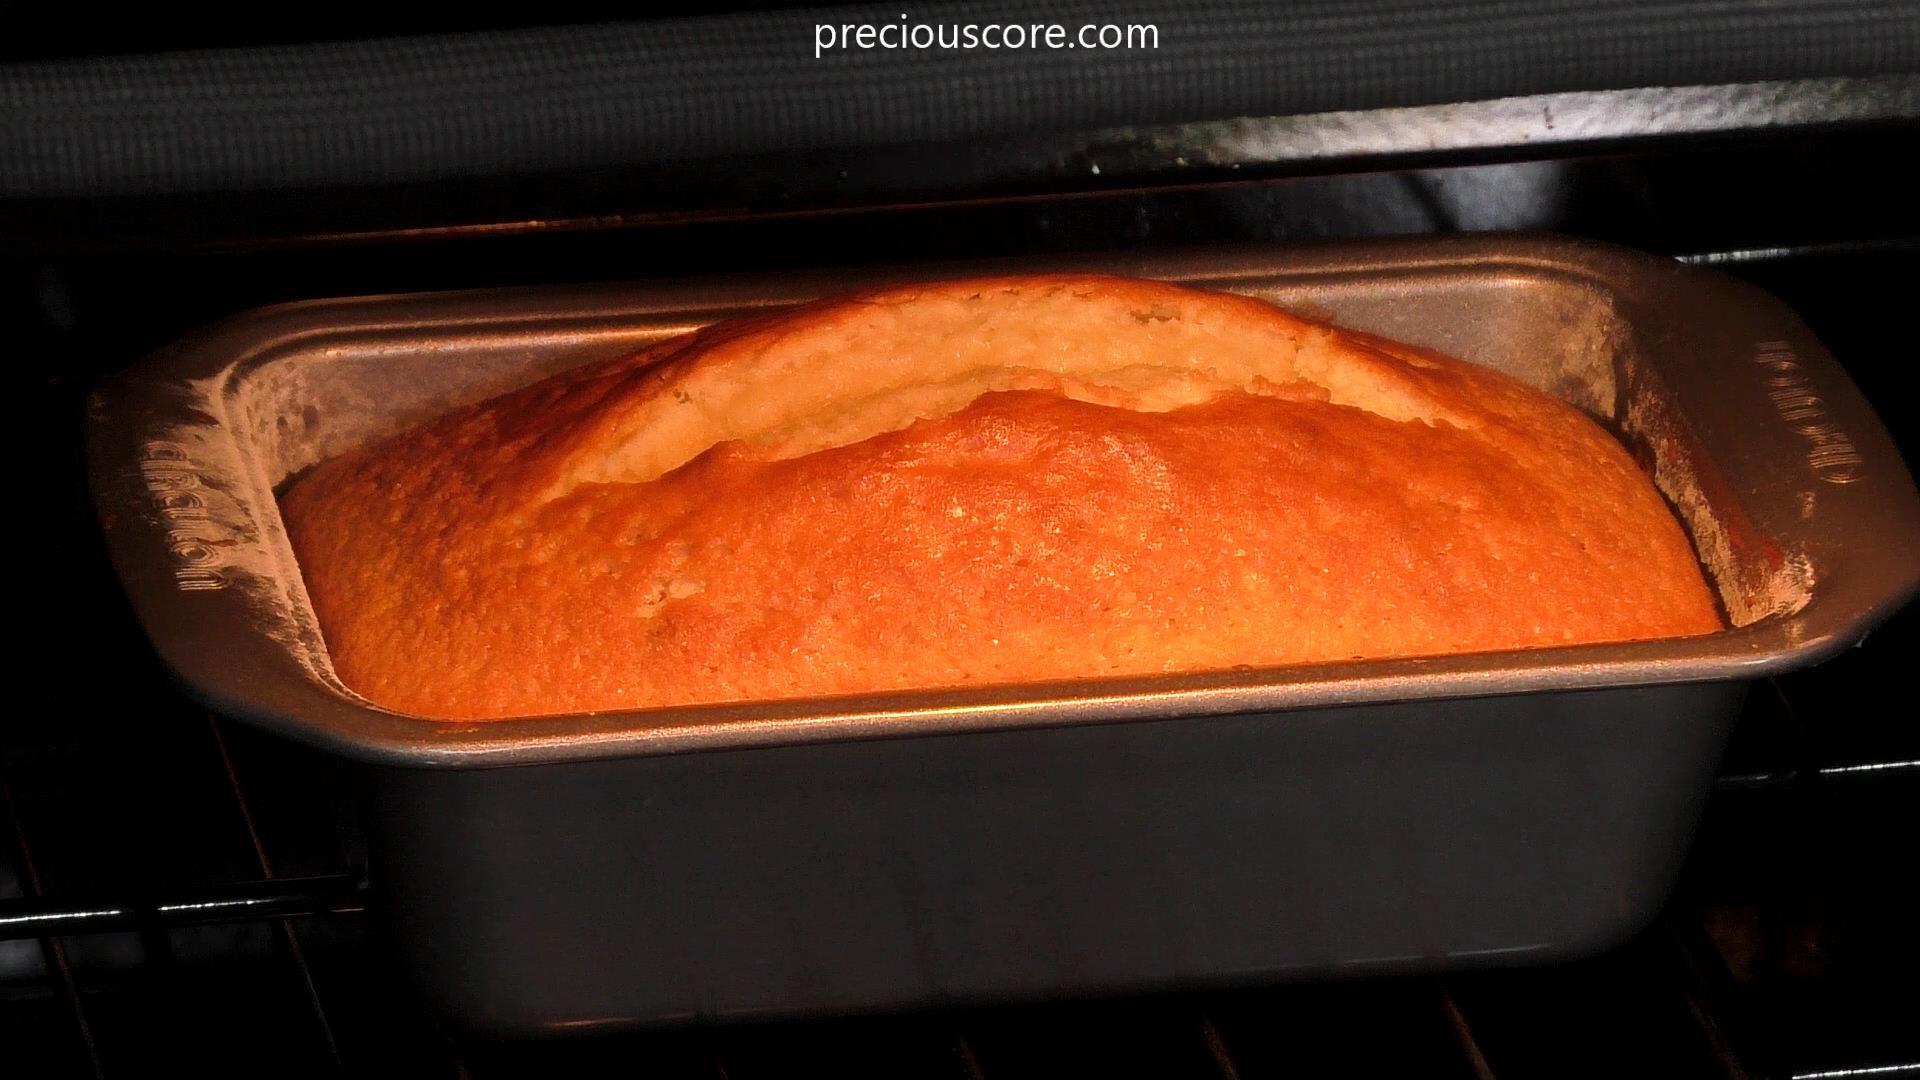 VANILLA POUND CAKE | The Best Pound Cake Recipe! (+VIDEO)